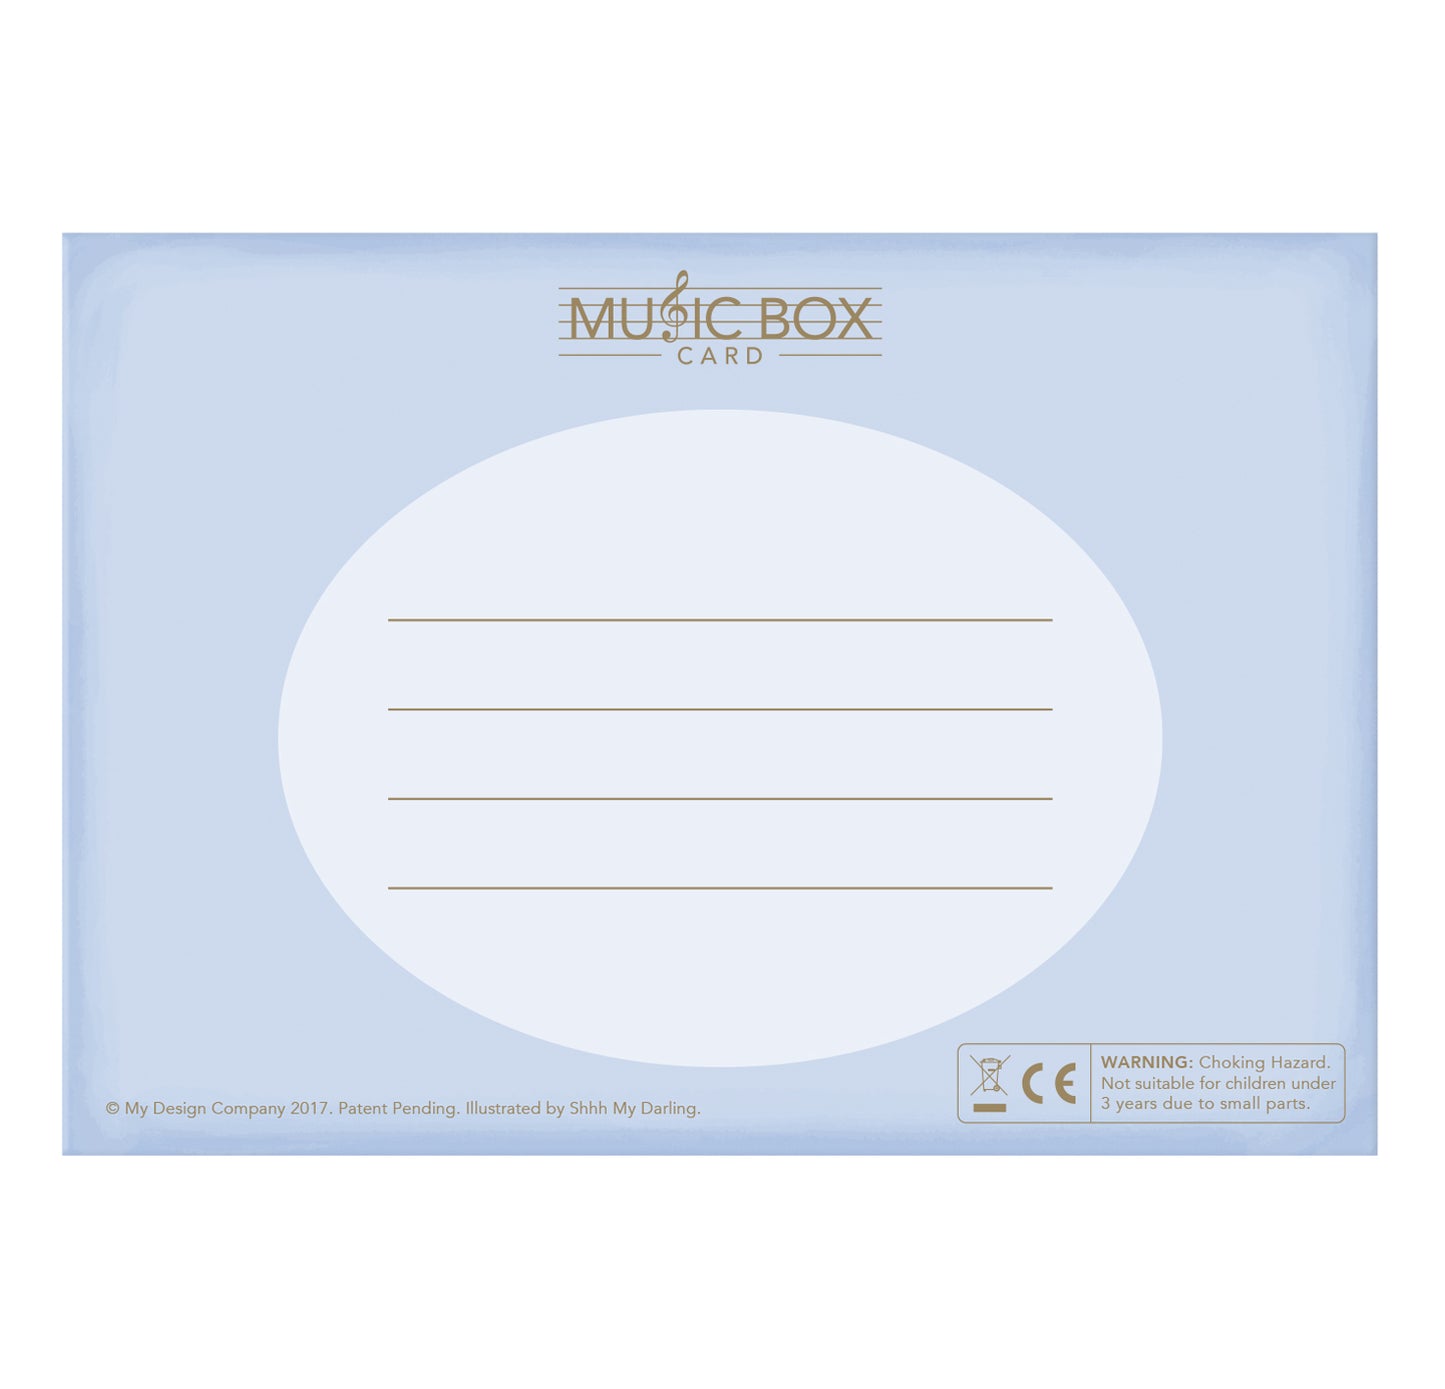 Aladdin's Adventures Music Box Card Novelty Dancing Musical Greeting Card